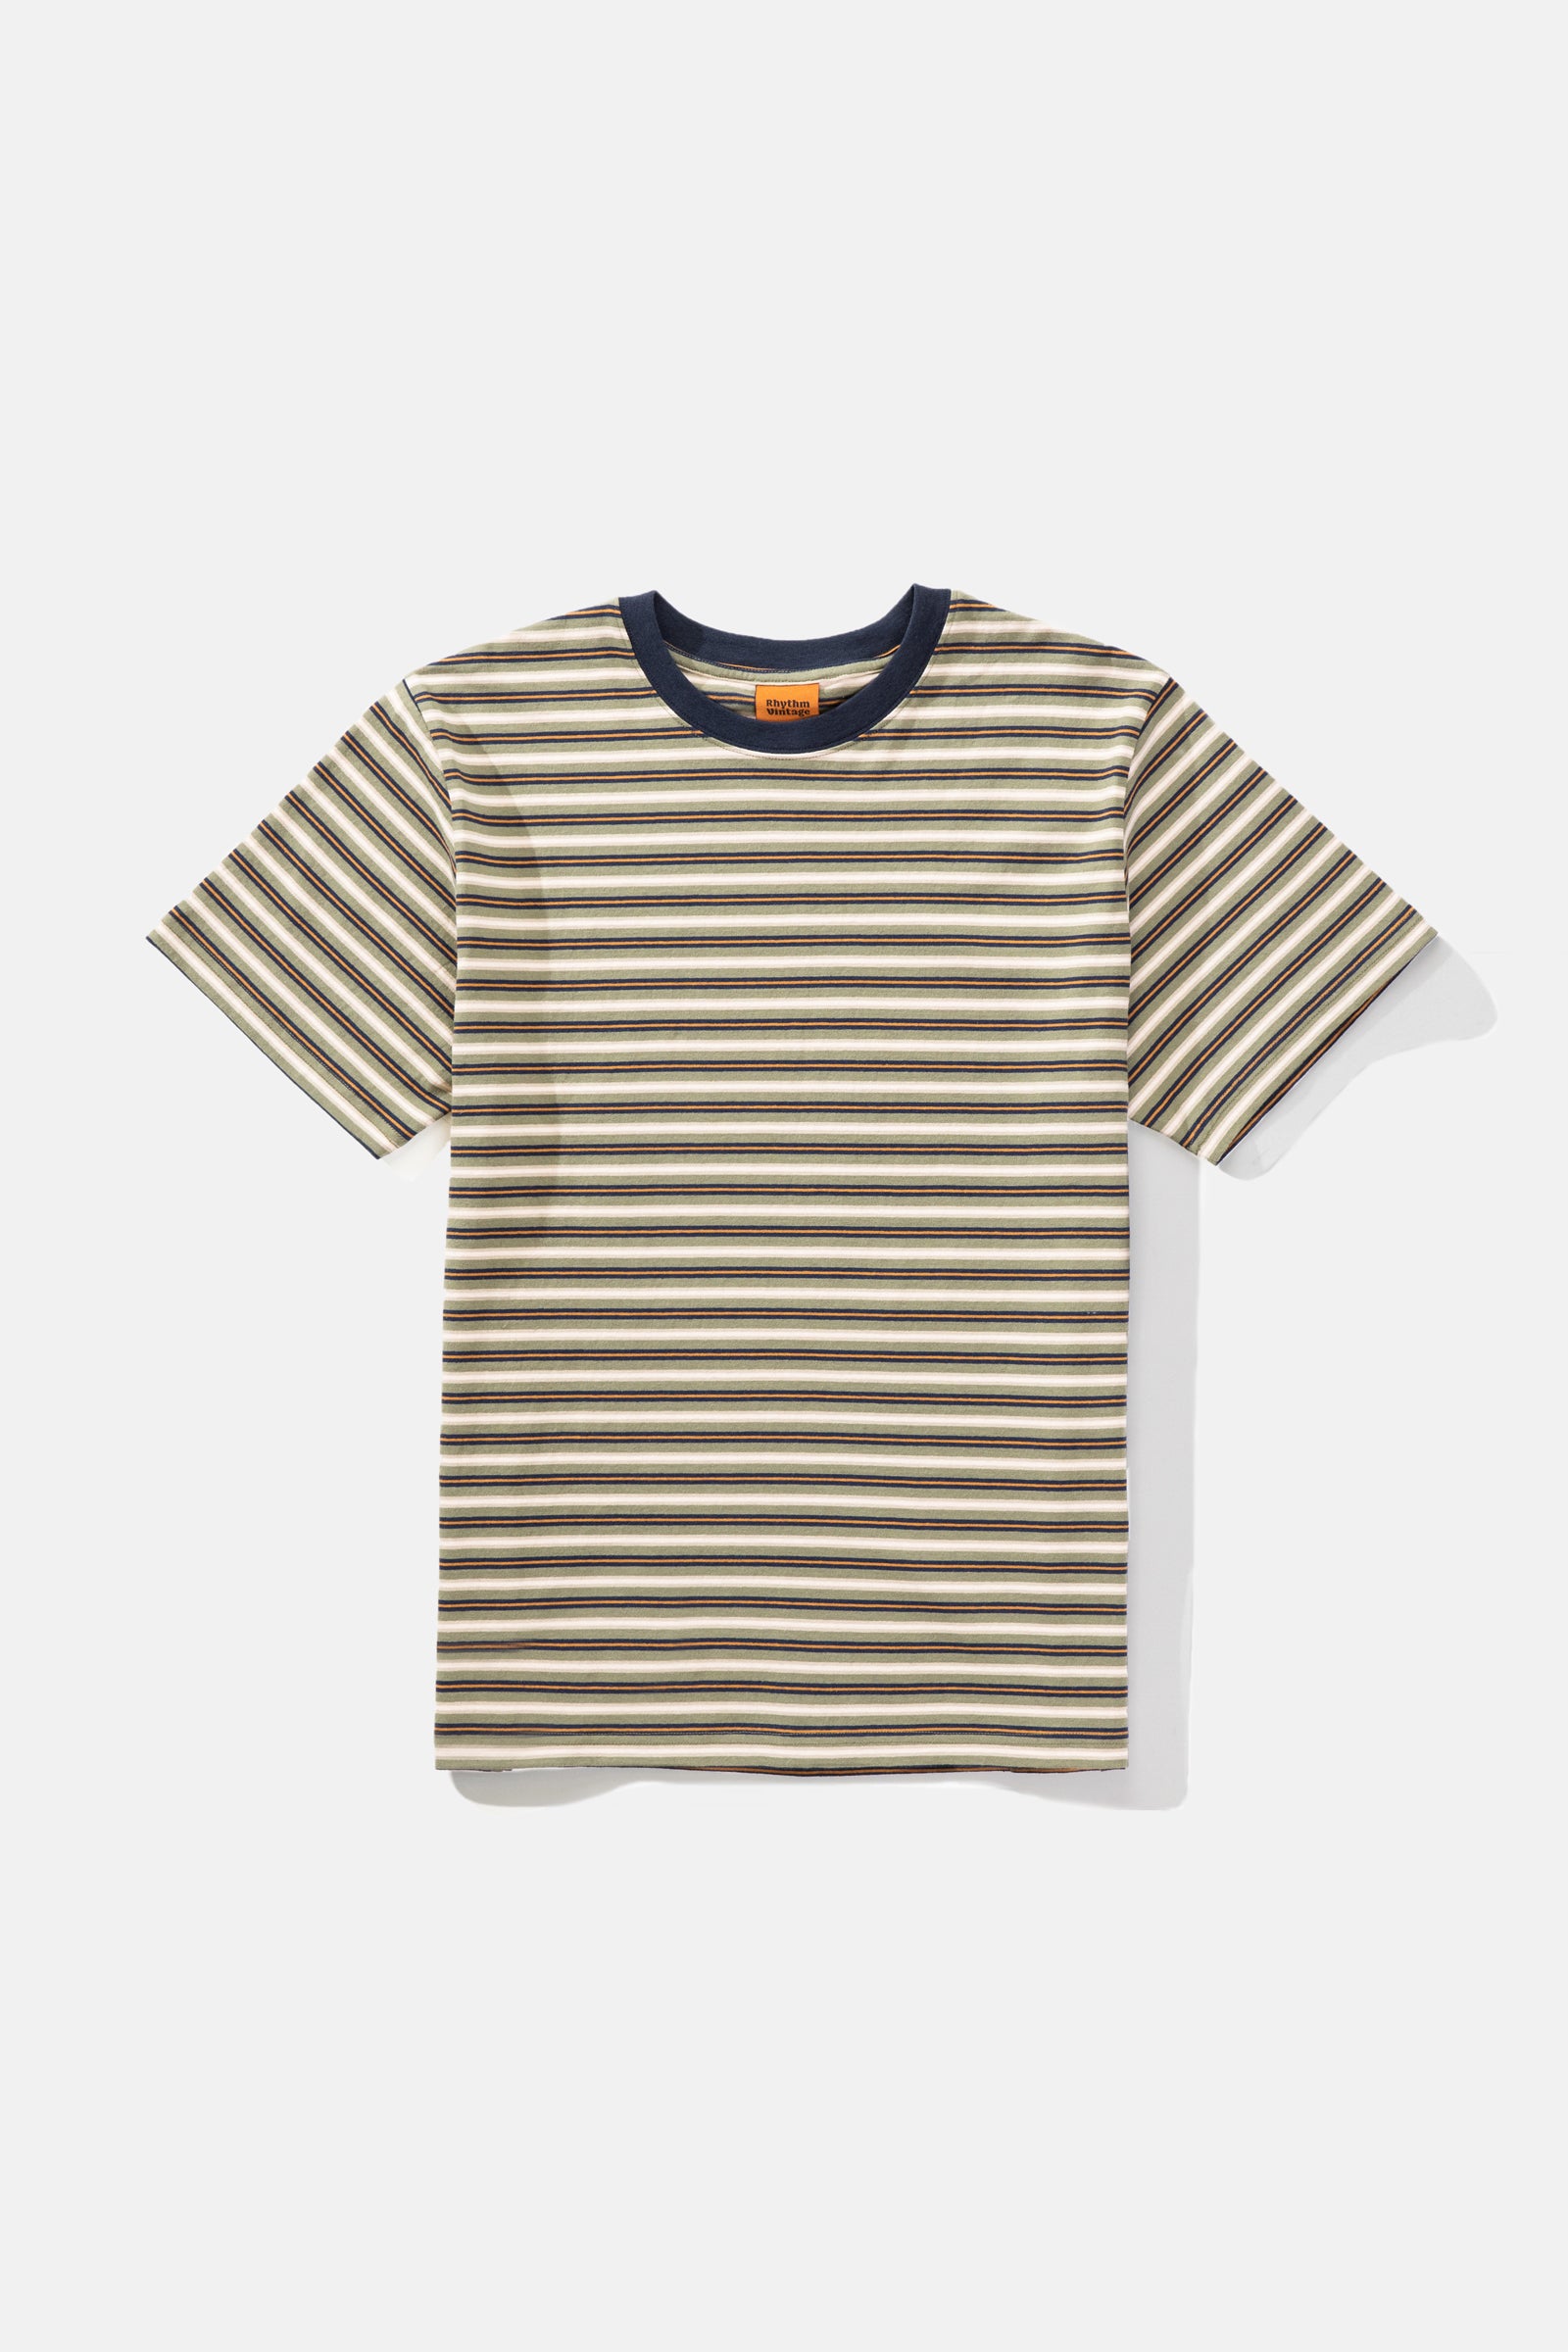 Stripe Vintage SS T-Shirt Olive – Rhythm US